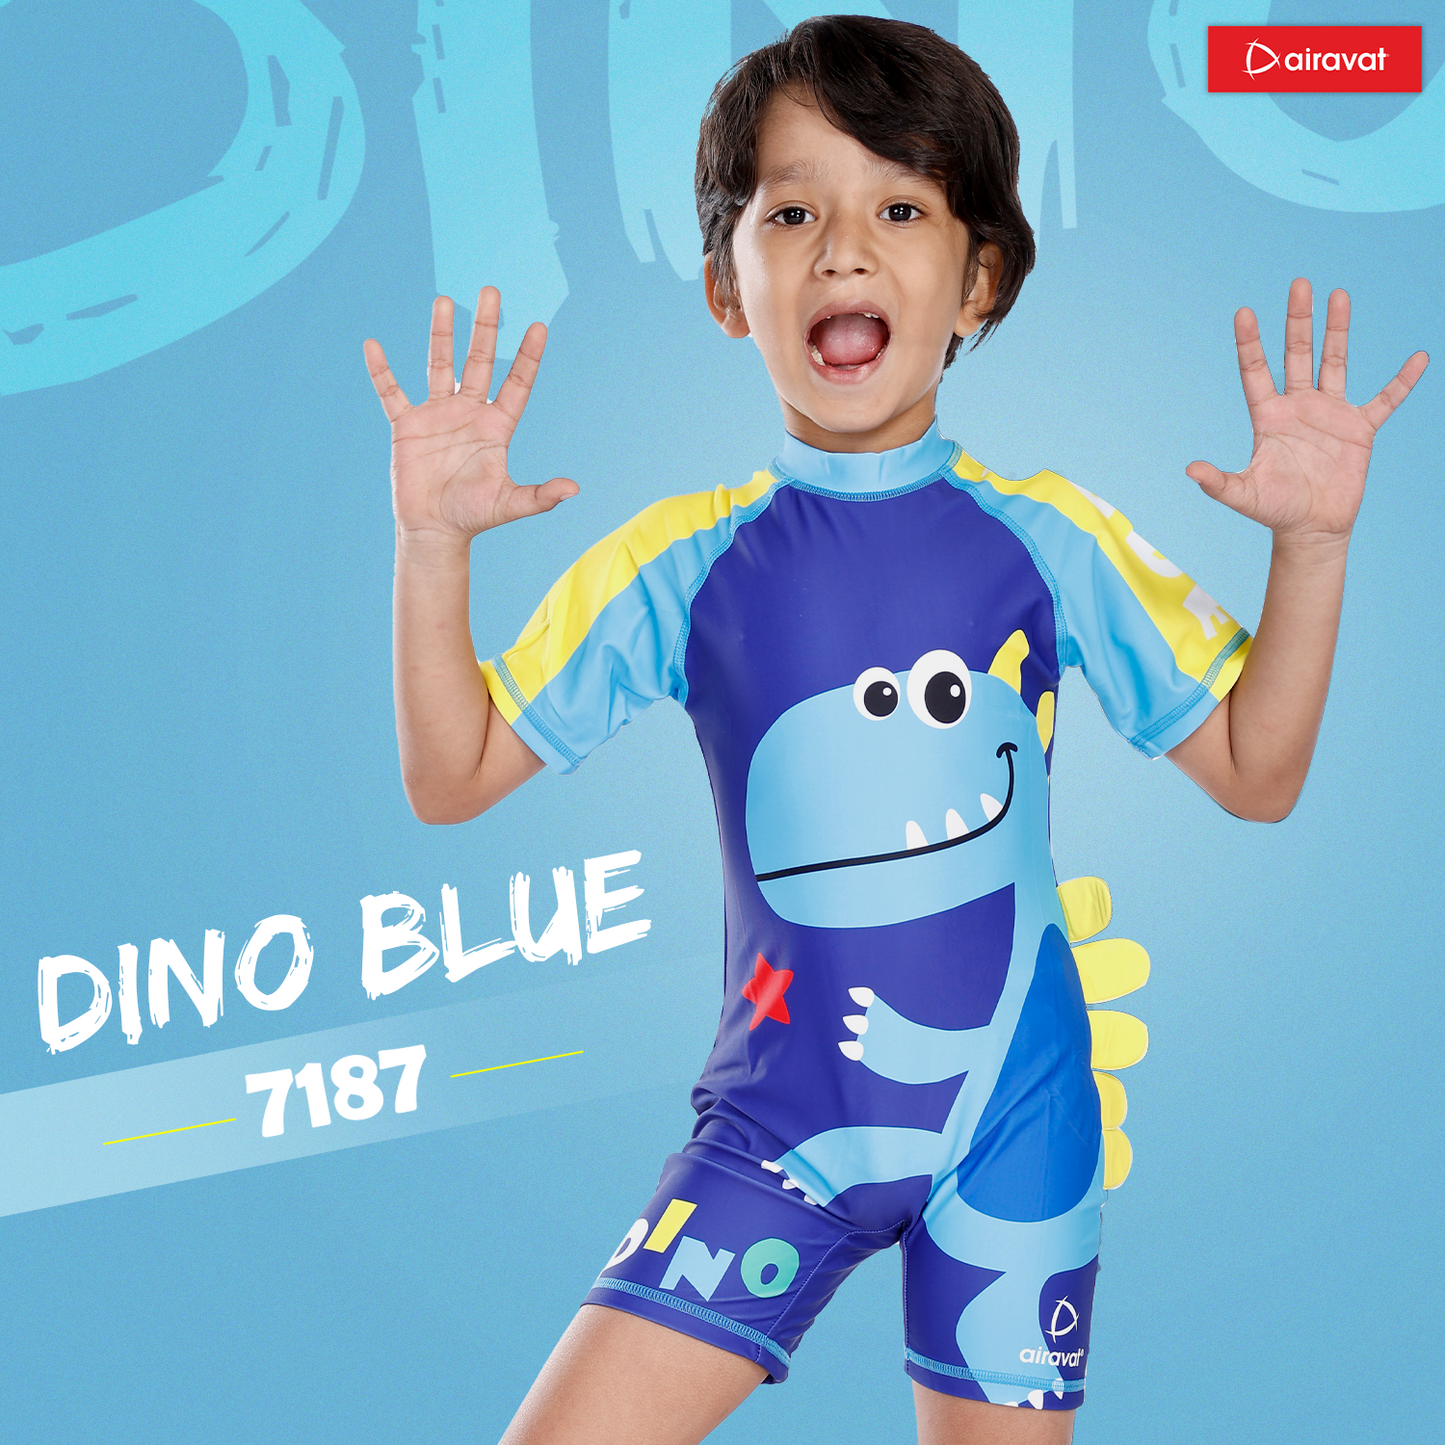 DINO BLUE 1513 (7187)